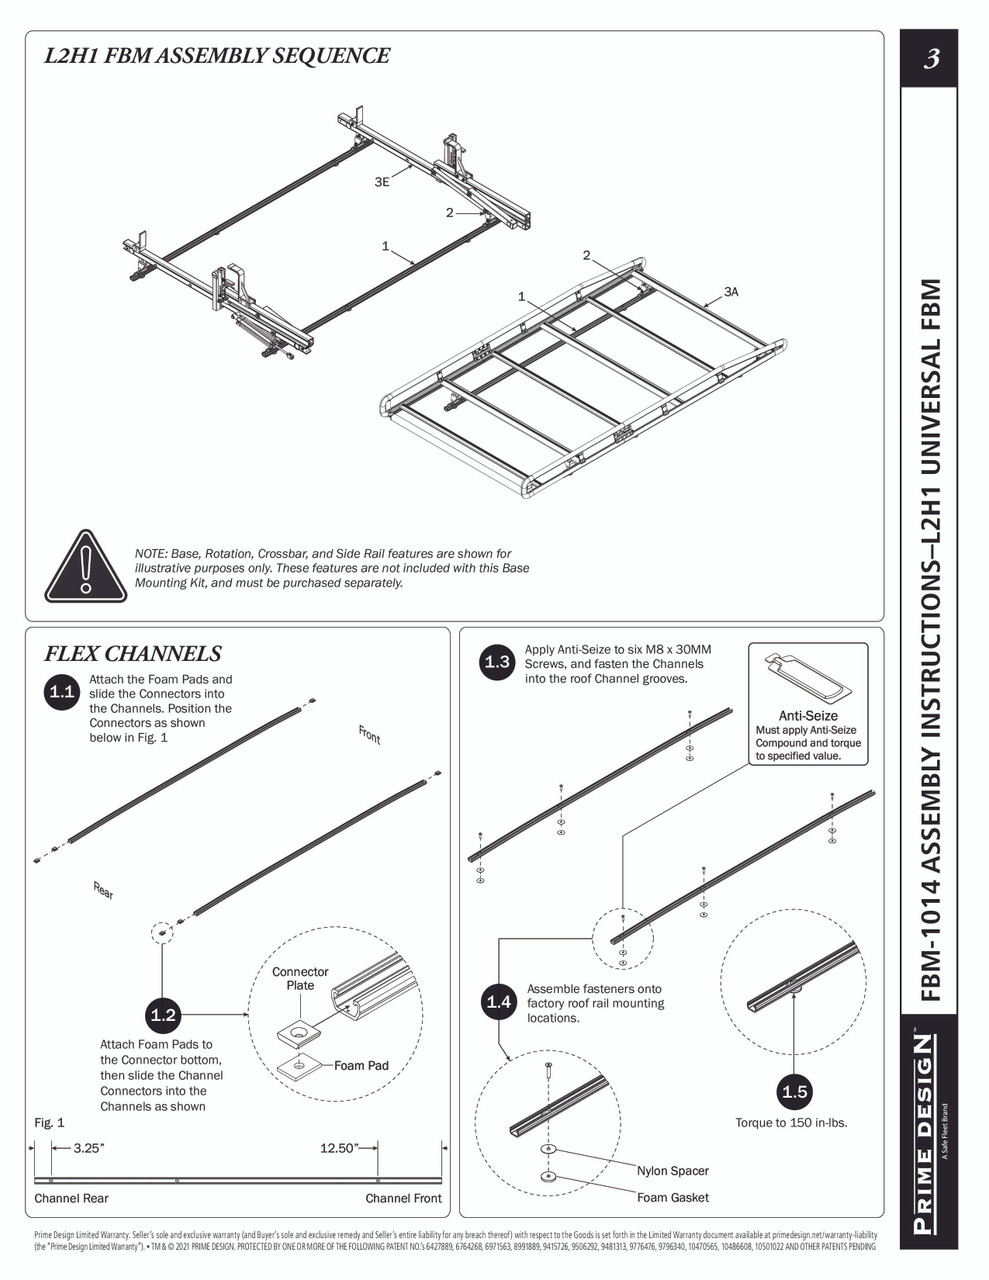 LadderProducts.com | Prime Design FBM-1014 Nissan NV200 & Chevrolet City Express Roof Mounting Kit